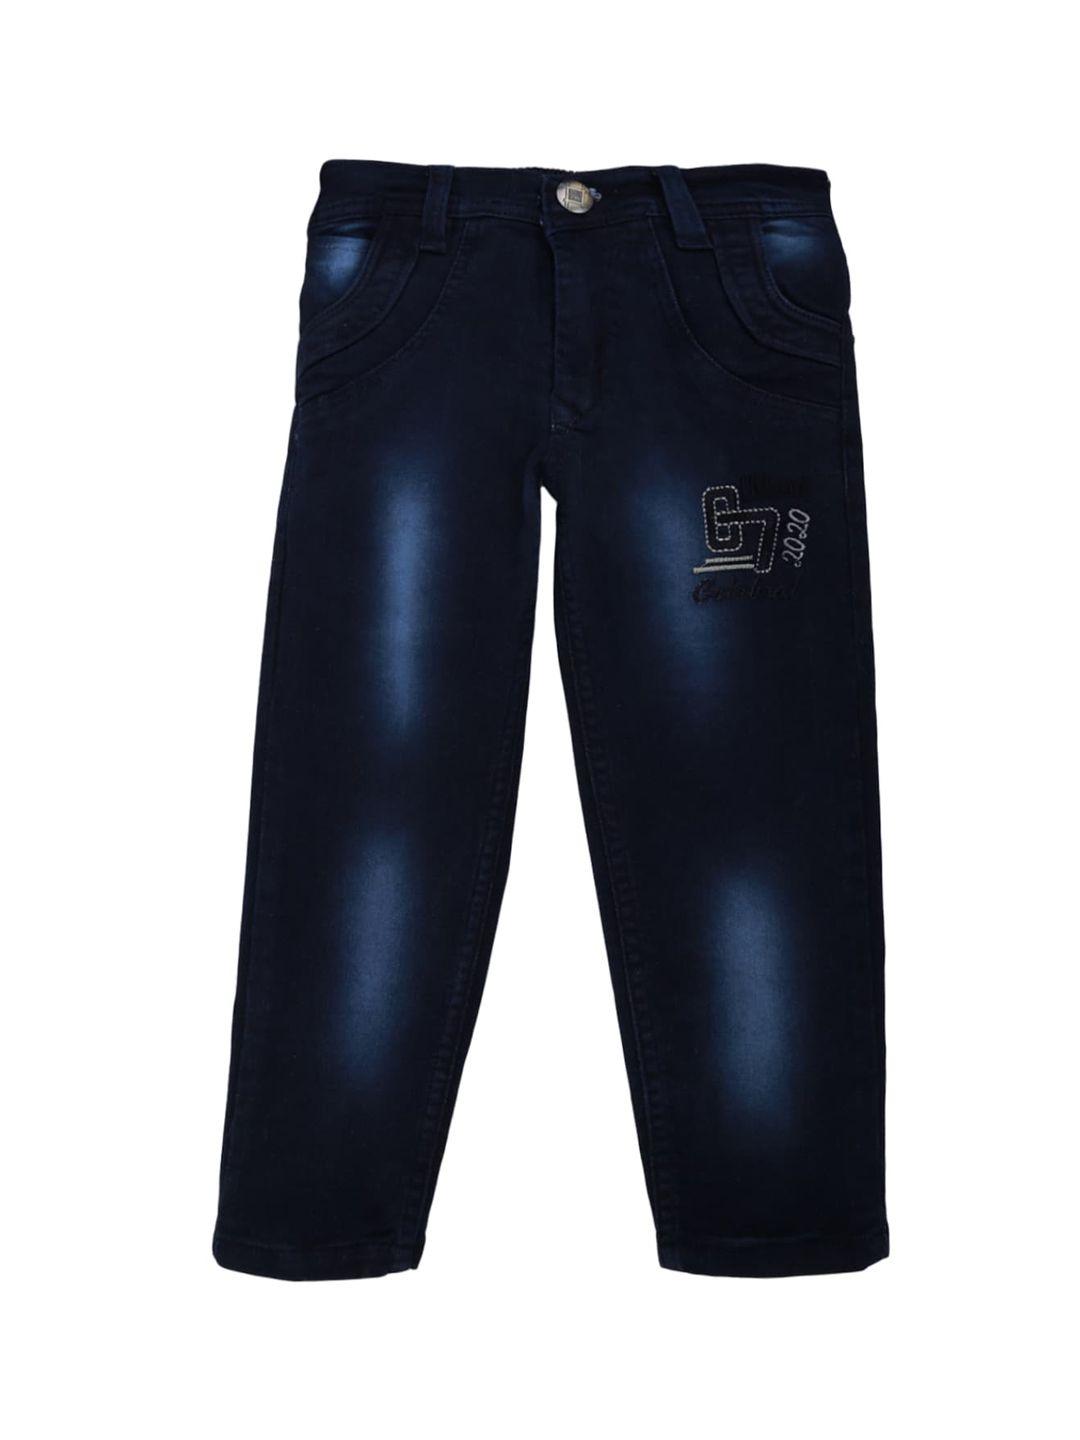 v-mart boys navy blue classic dobby jeans